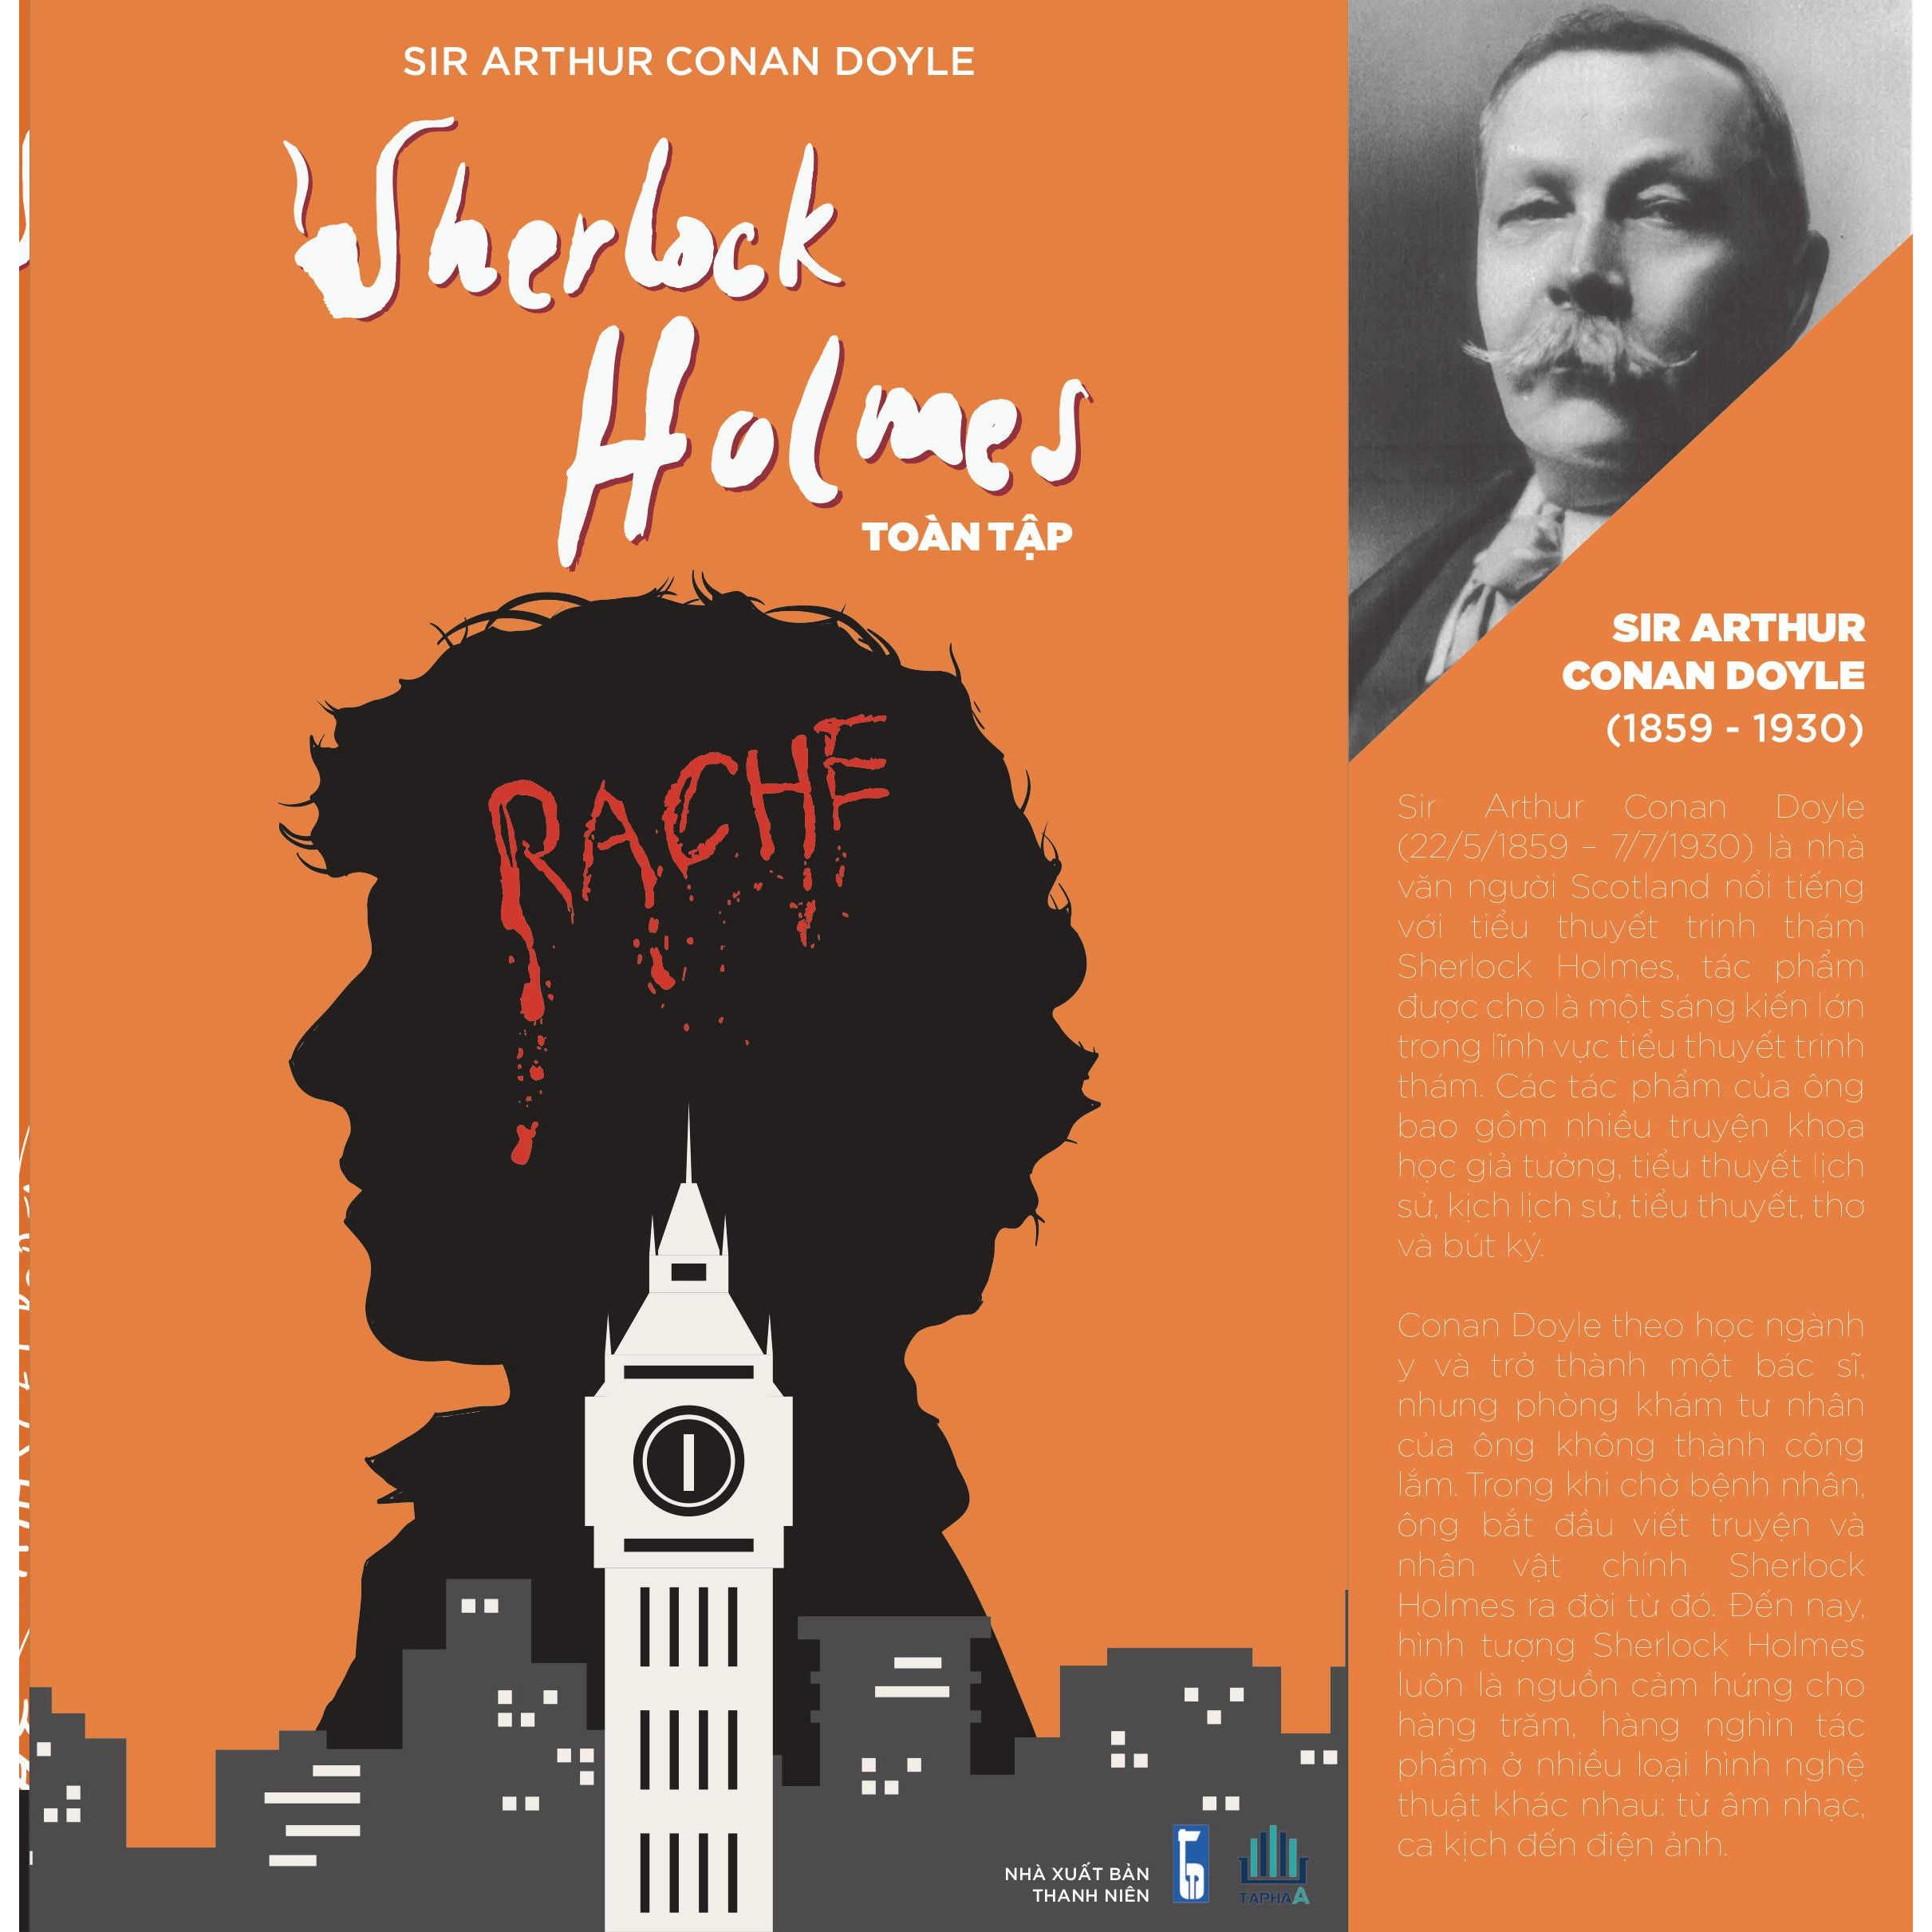 Sherlock Holmes Toàn tập – Tập 1